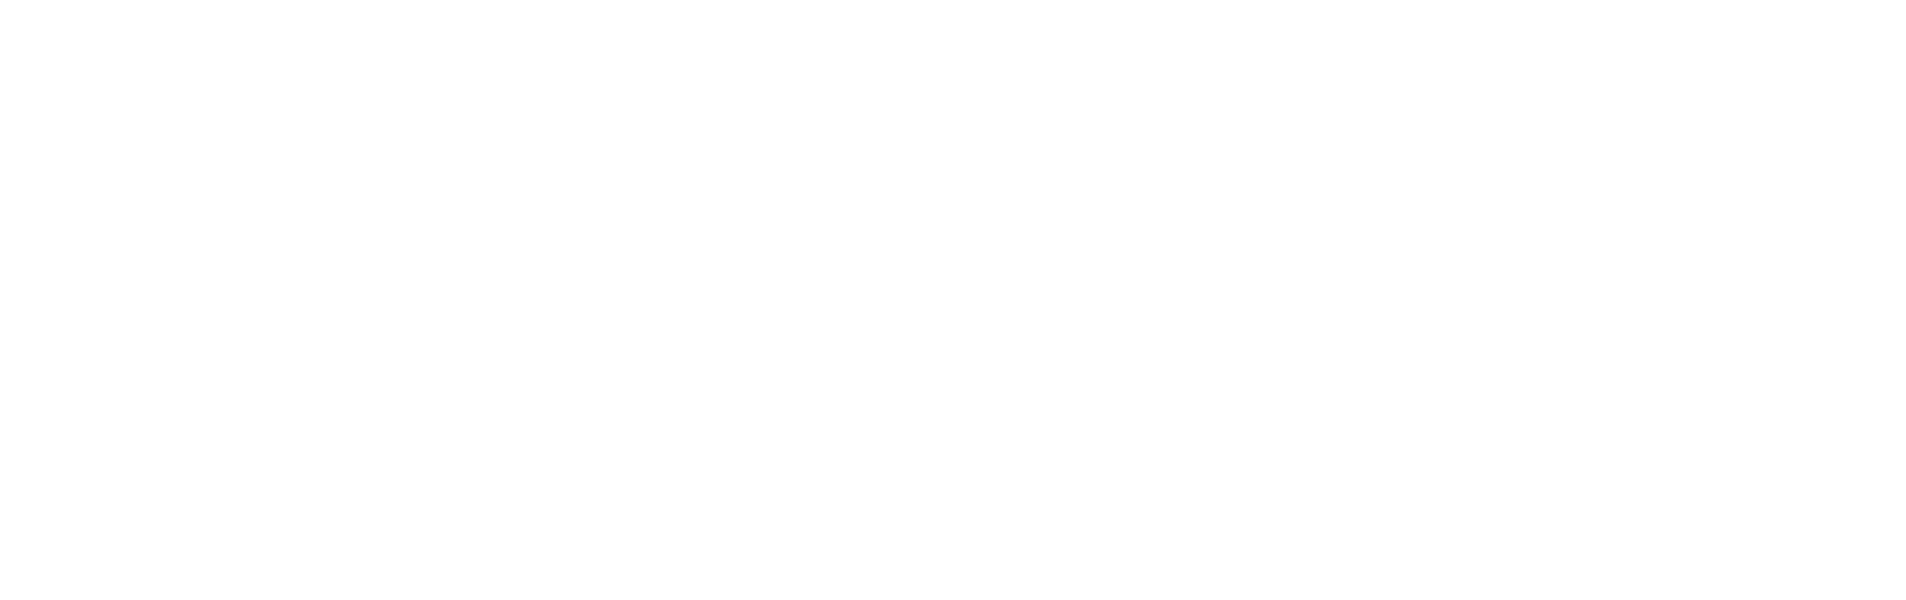 Comsfy Global